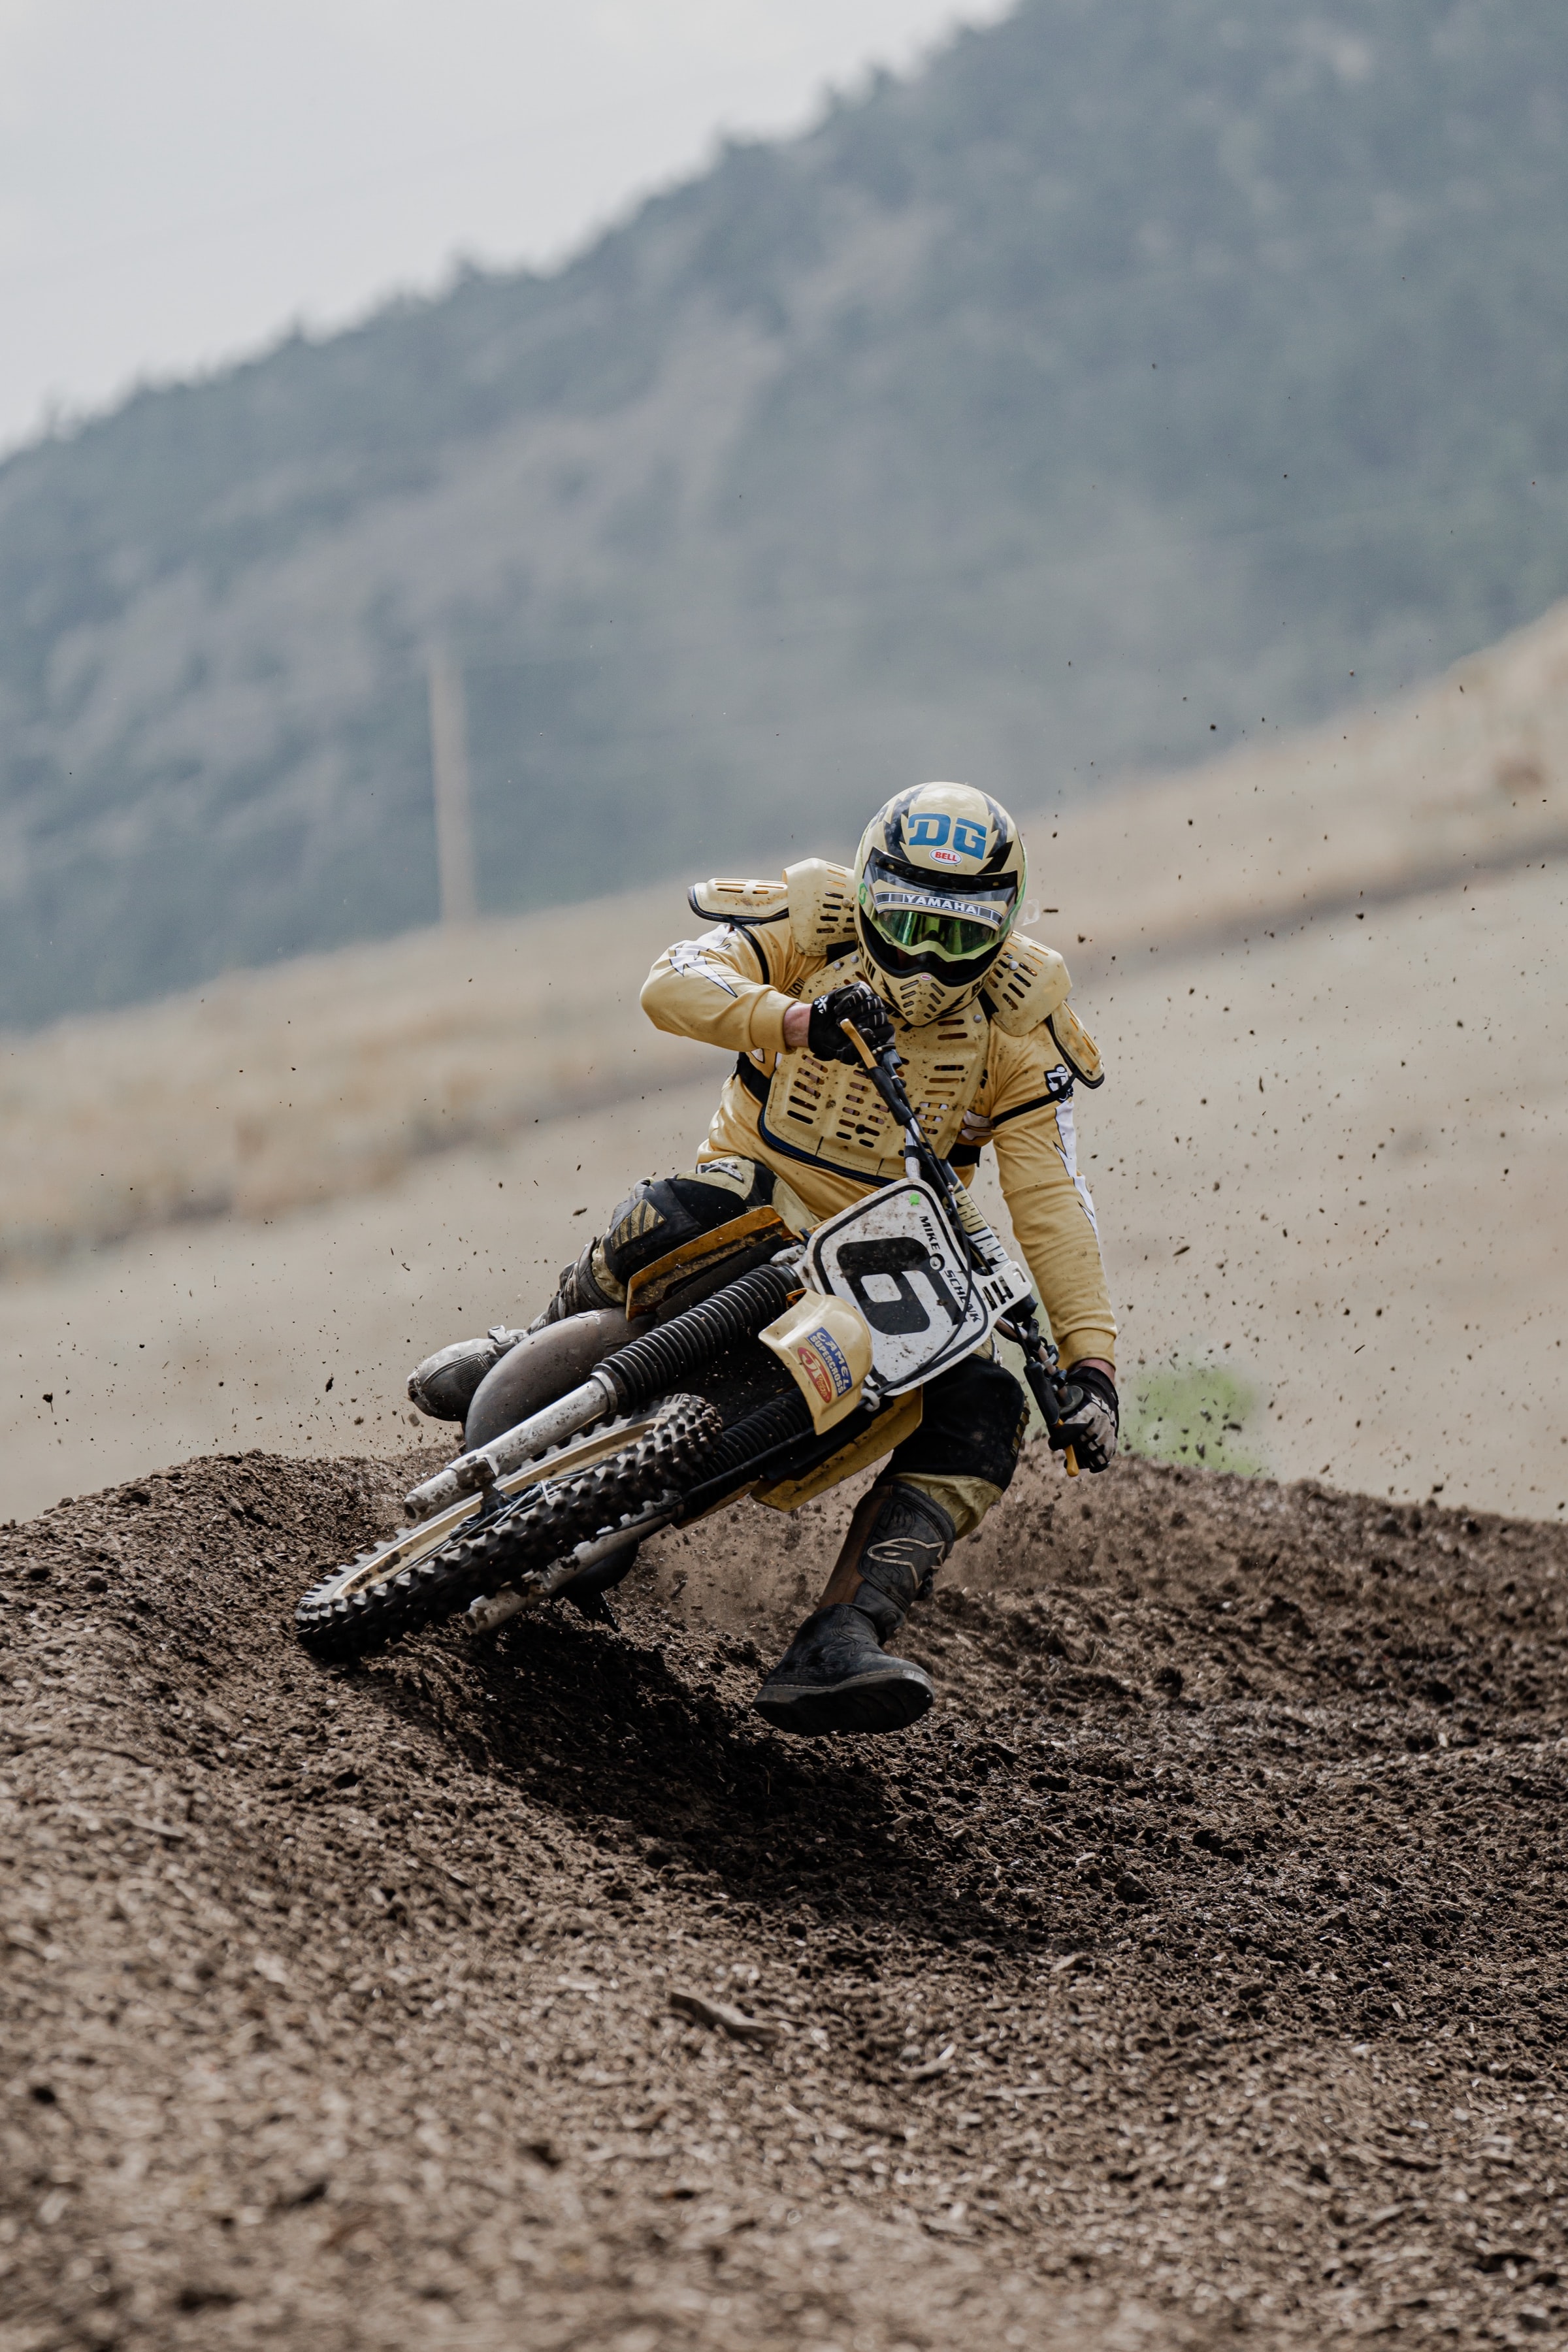 desktop Images motorcycles, motorcyclist, helmet, mud, dirt, trick